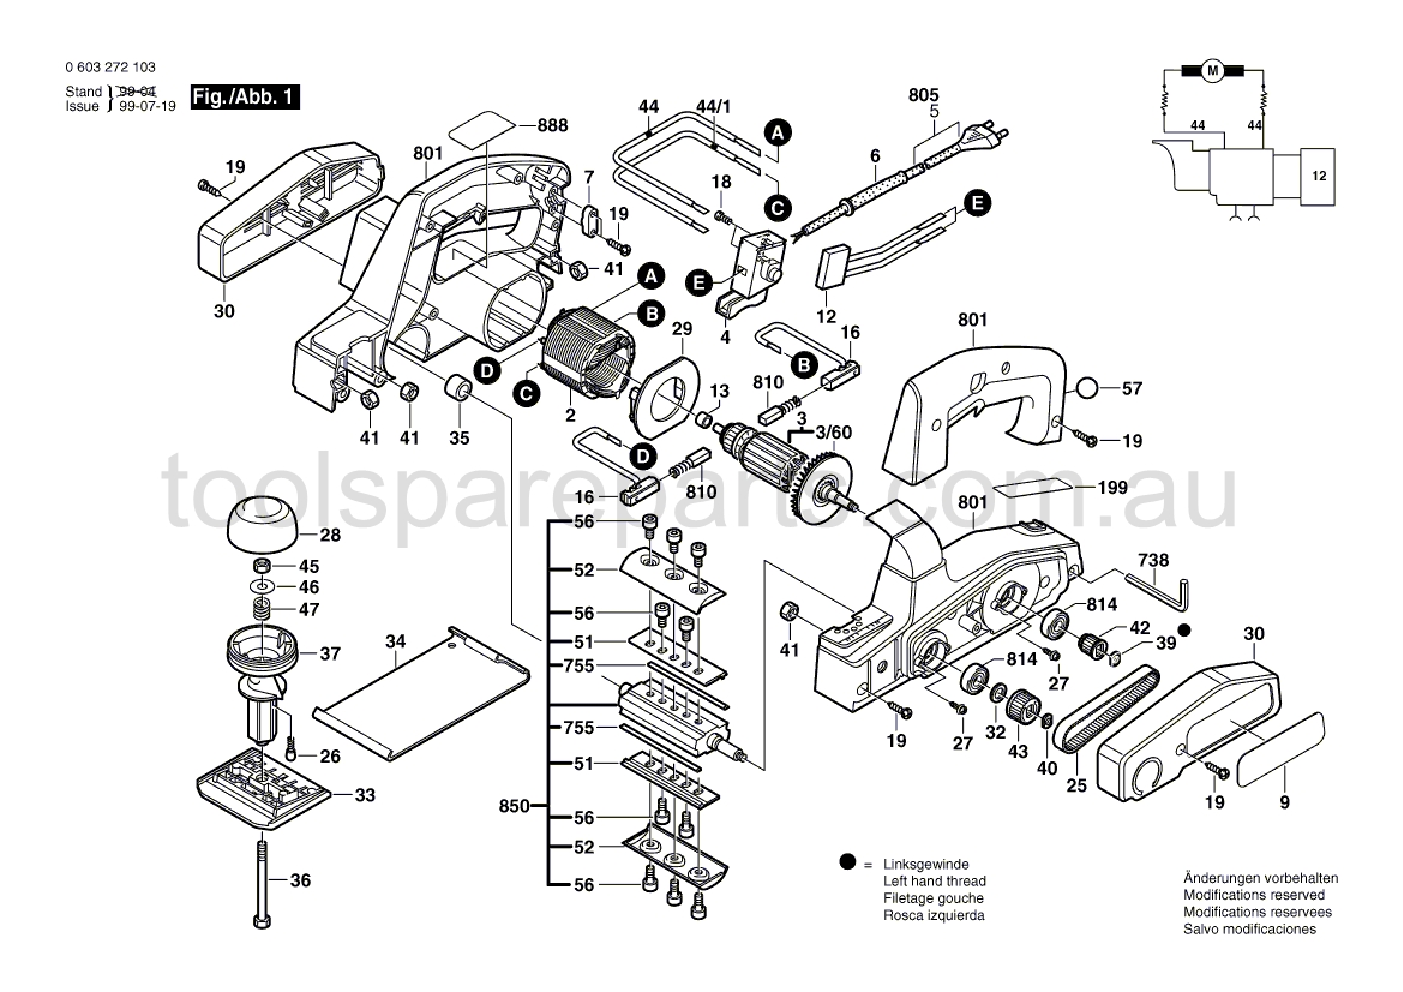 Bosch PHO 15-82 0603272137  Diagram 1